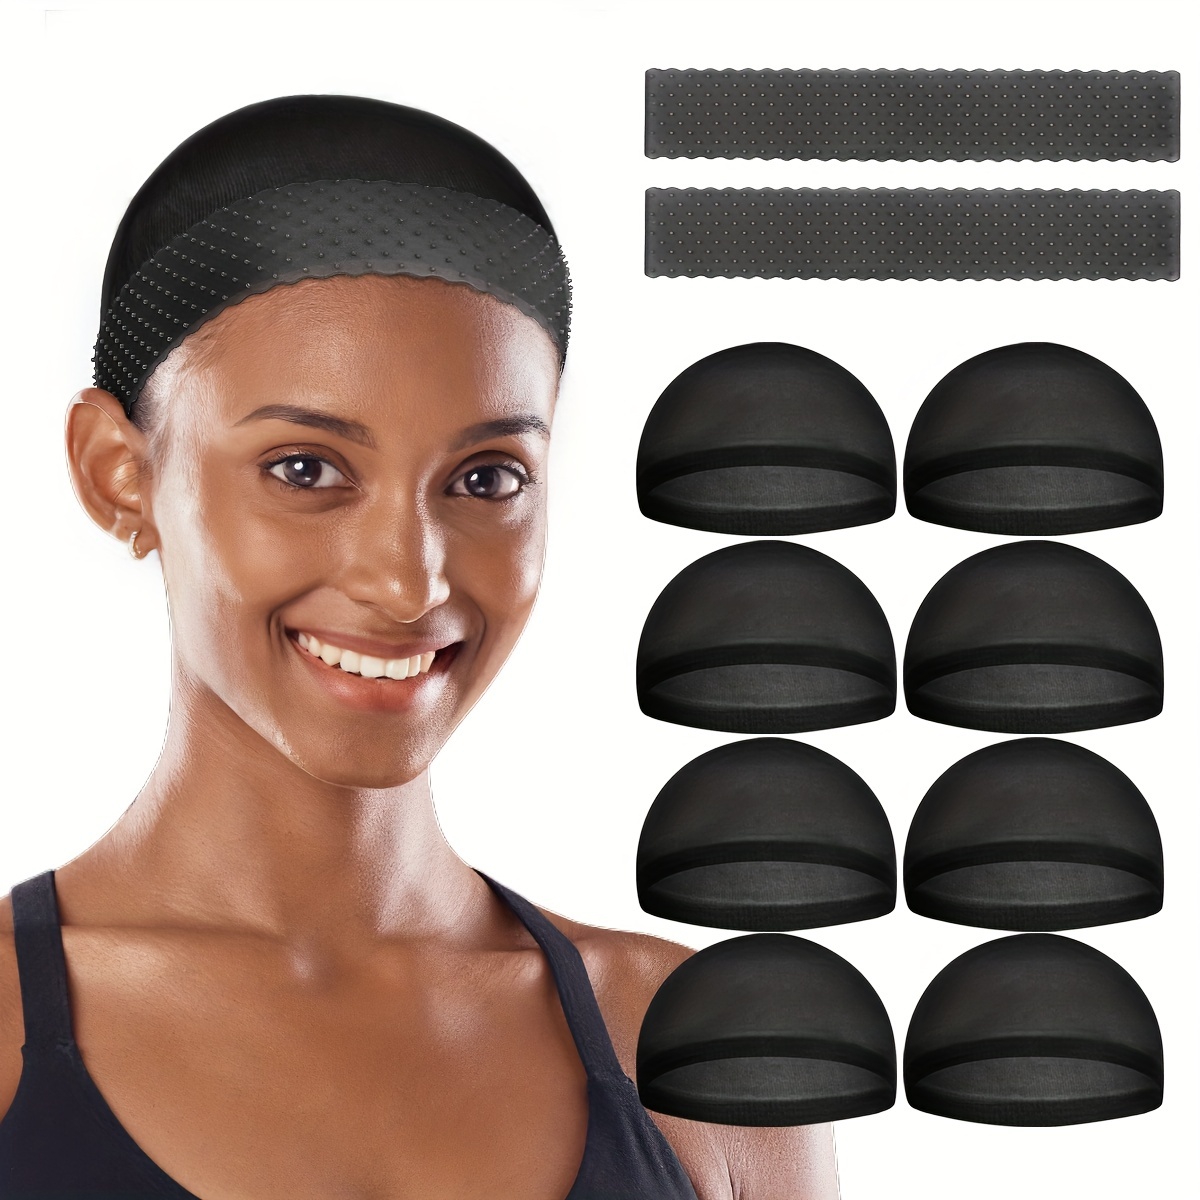 2 Pcs Silicone Grip Wig Band Adjustable Silicone Wig Headband Fix